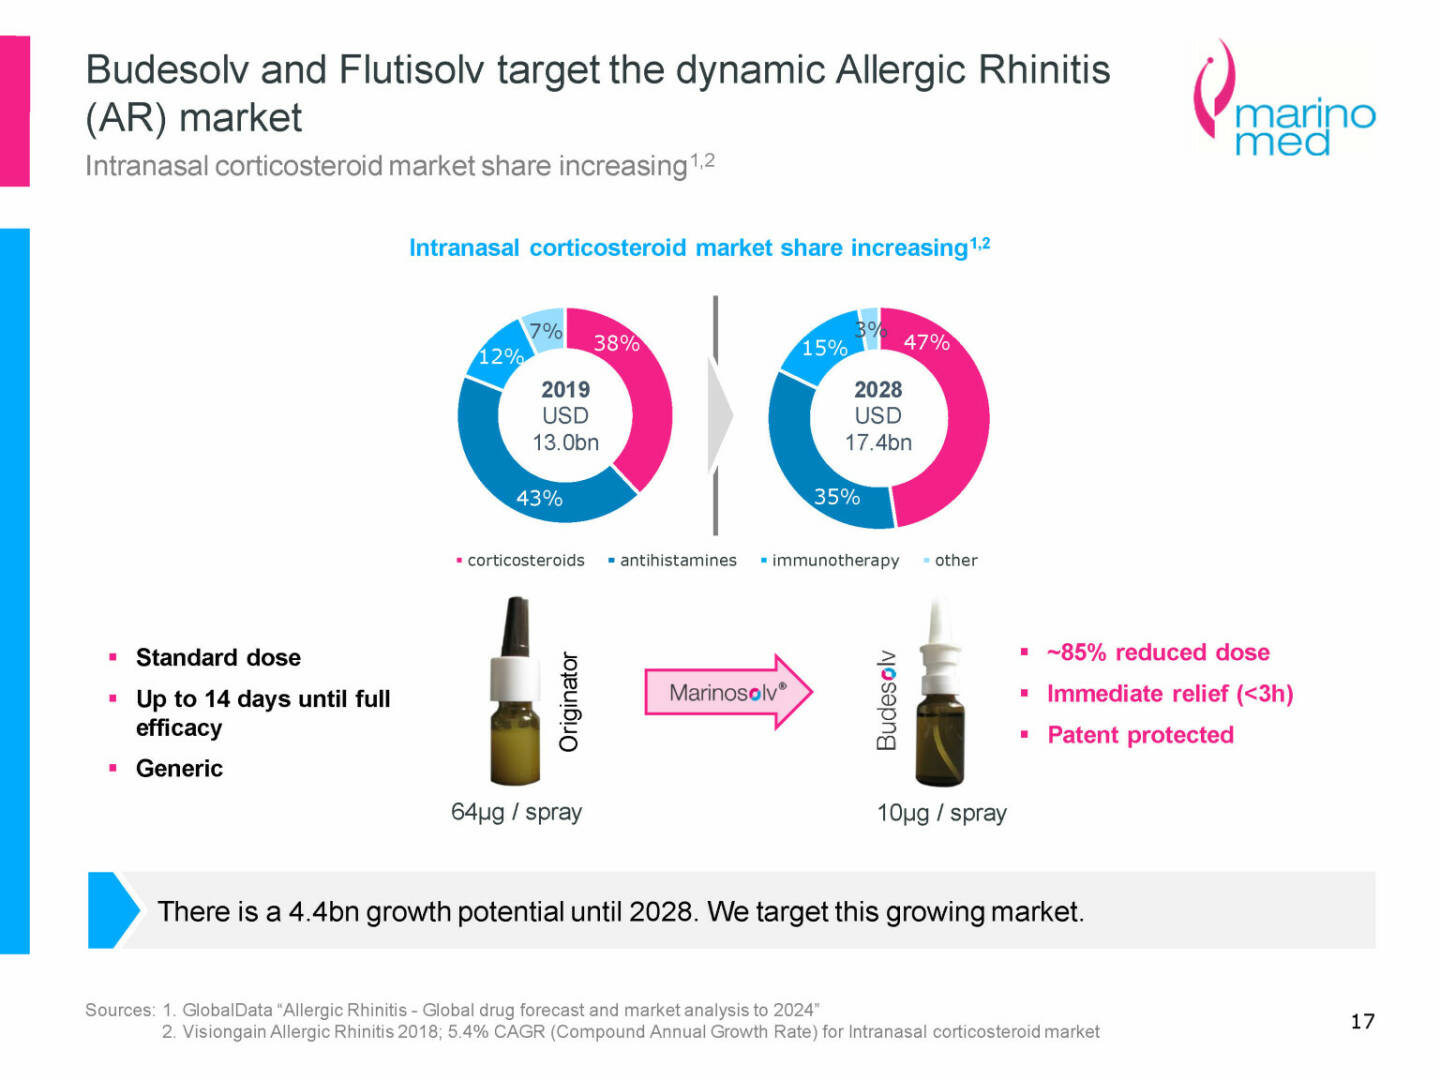 Marinomed - Budesolv and Flutisolv target the dynamic Allergic Rhinitis (AR) market